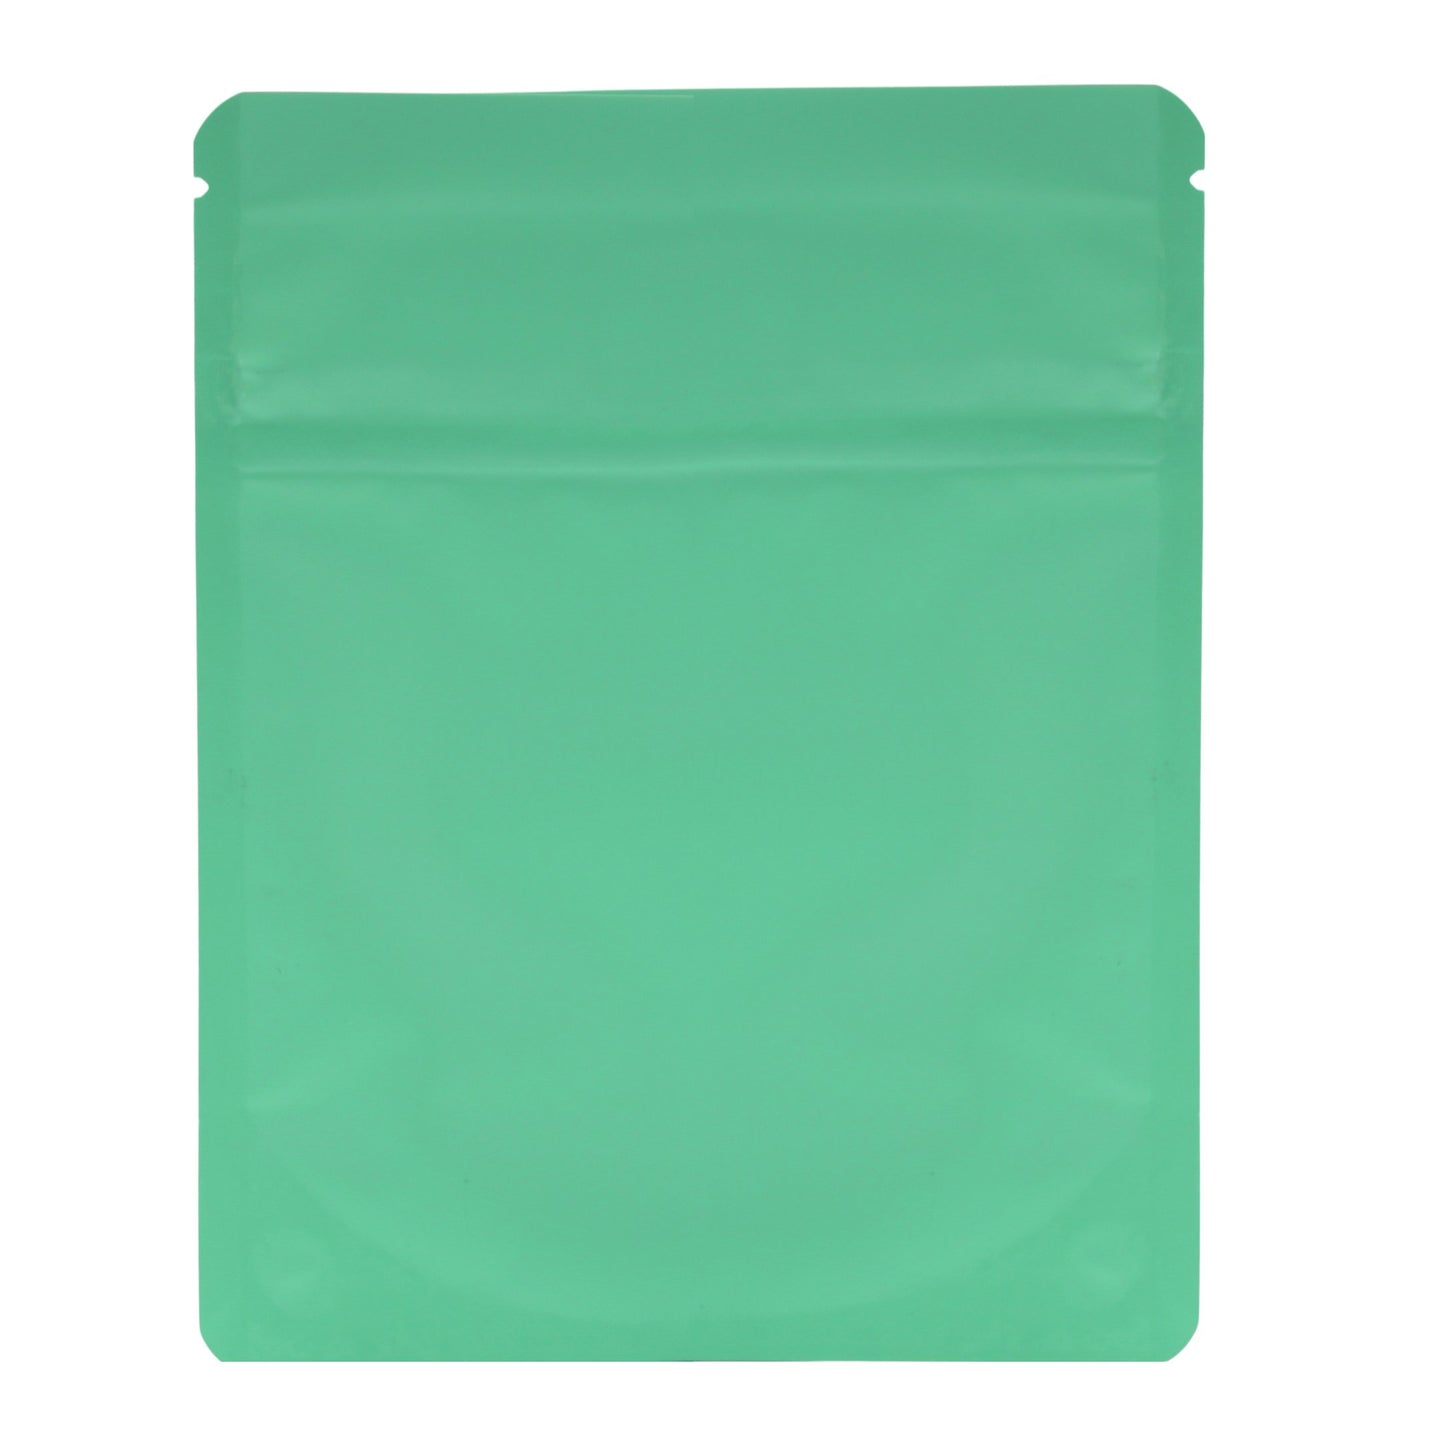 Bag King Child-Resistant Opaque Wide Mouth Bag (1/8th oz) 3.9" x 4.9" Matte Seafoam